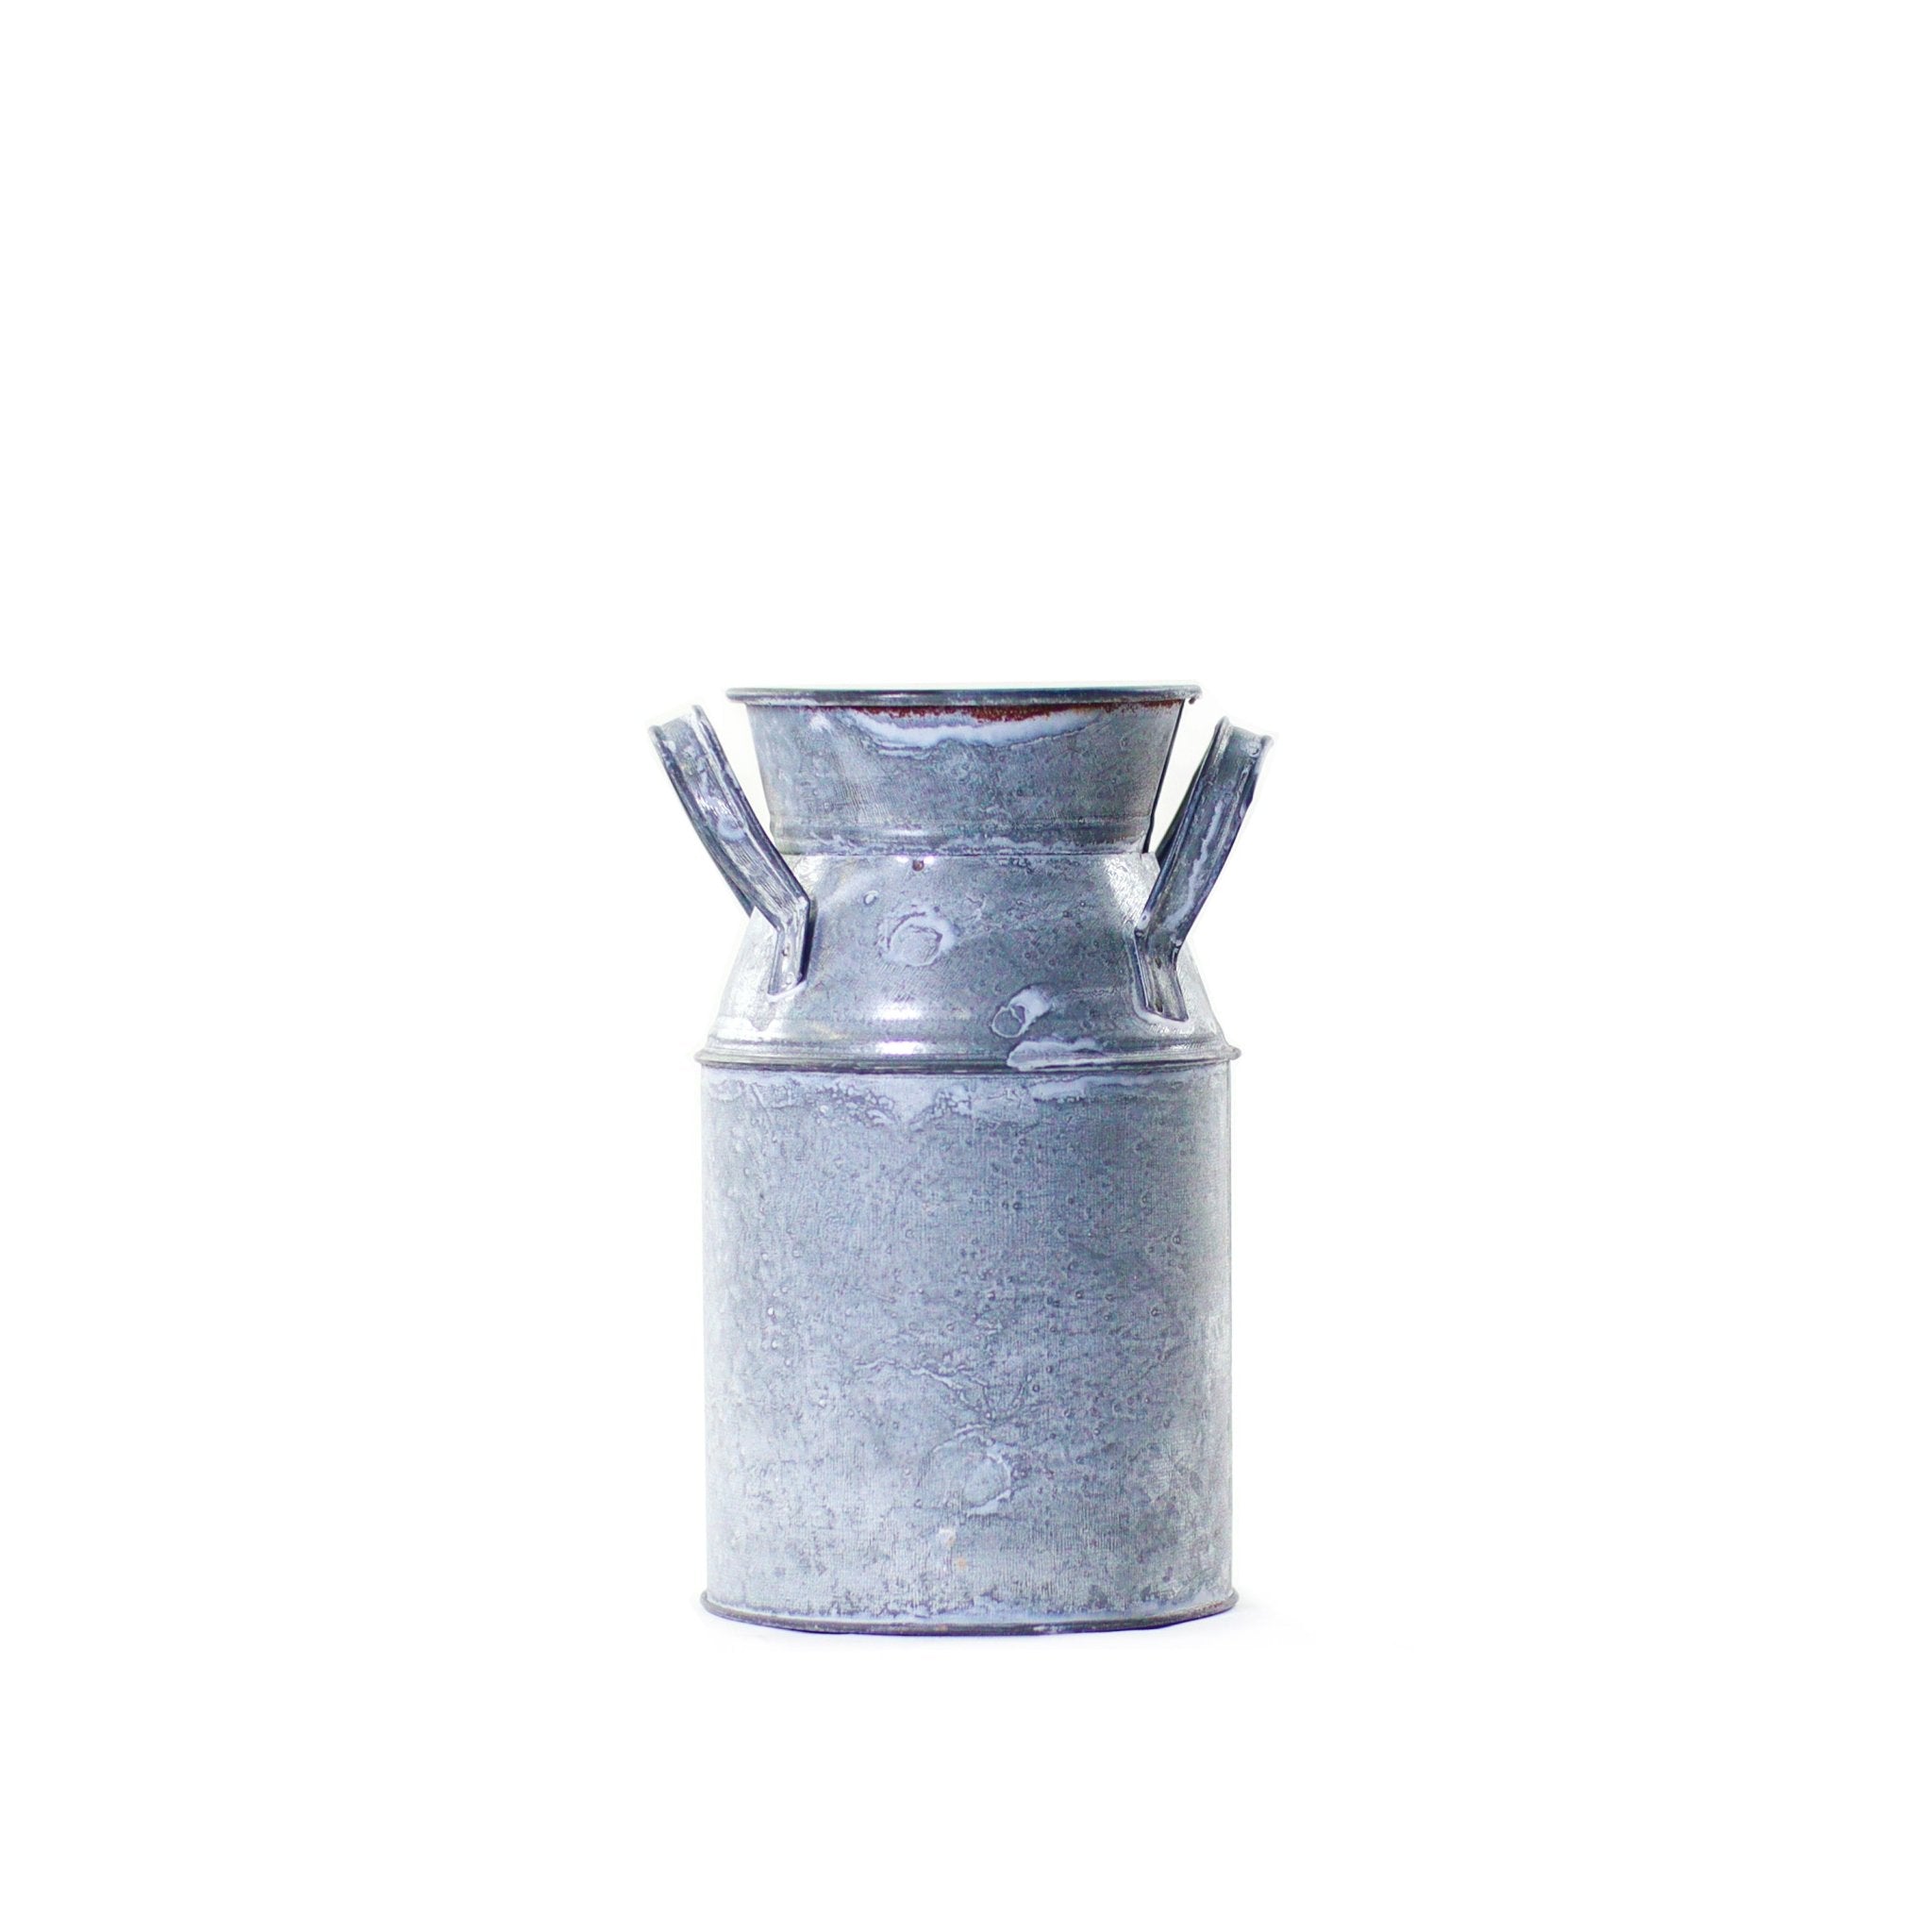 Galvanised Finish Farmhouse Vase Metal Milk Can Jug Tin Container with Handle - MODA FLORA Santa's Workshop